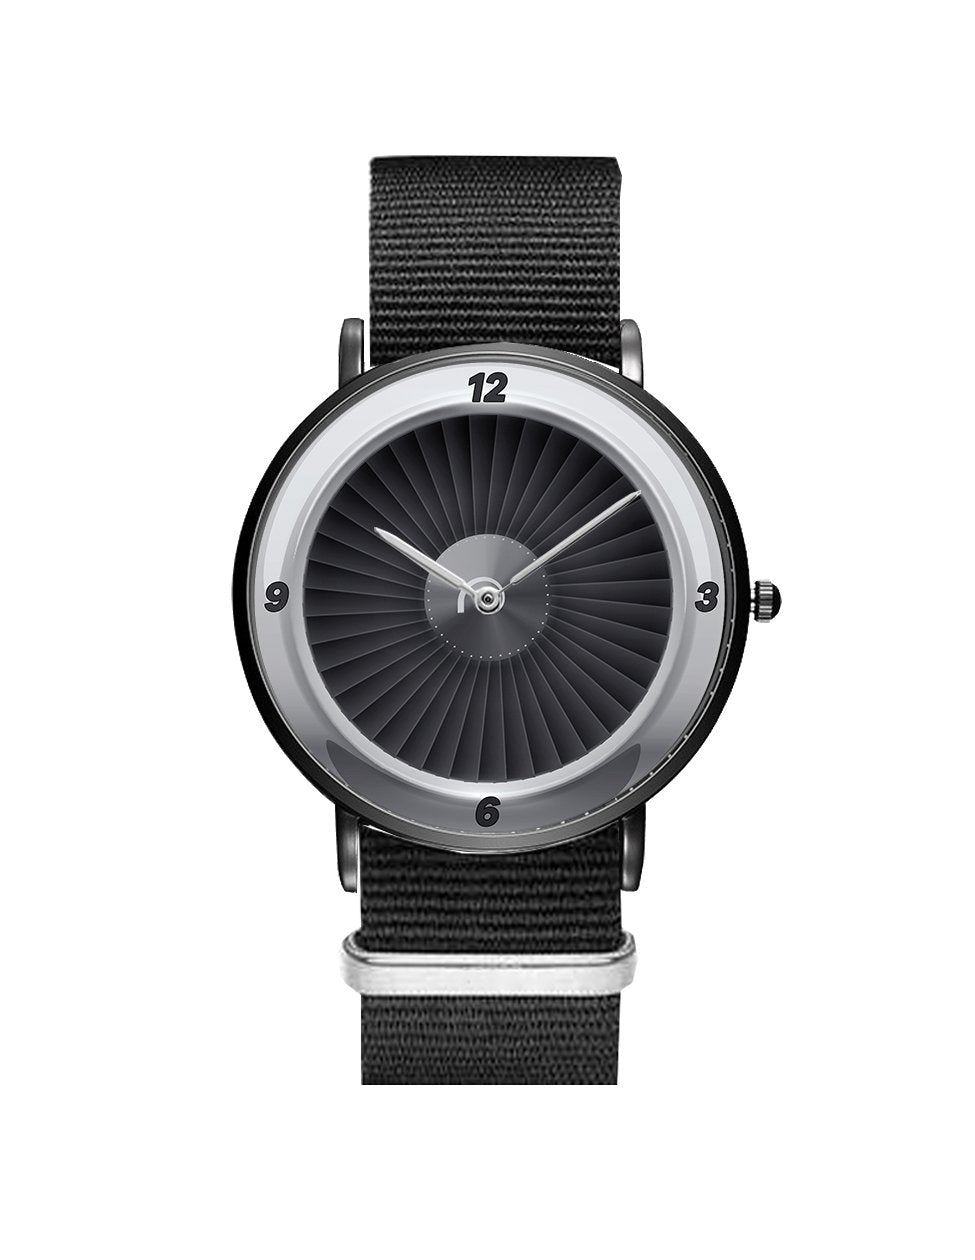 Jet Engine Designed Leather Strap Watches Pilot Eyes Store Black & Black Nylon Strap 